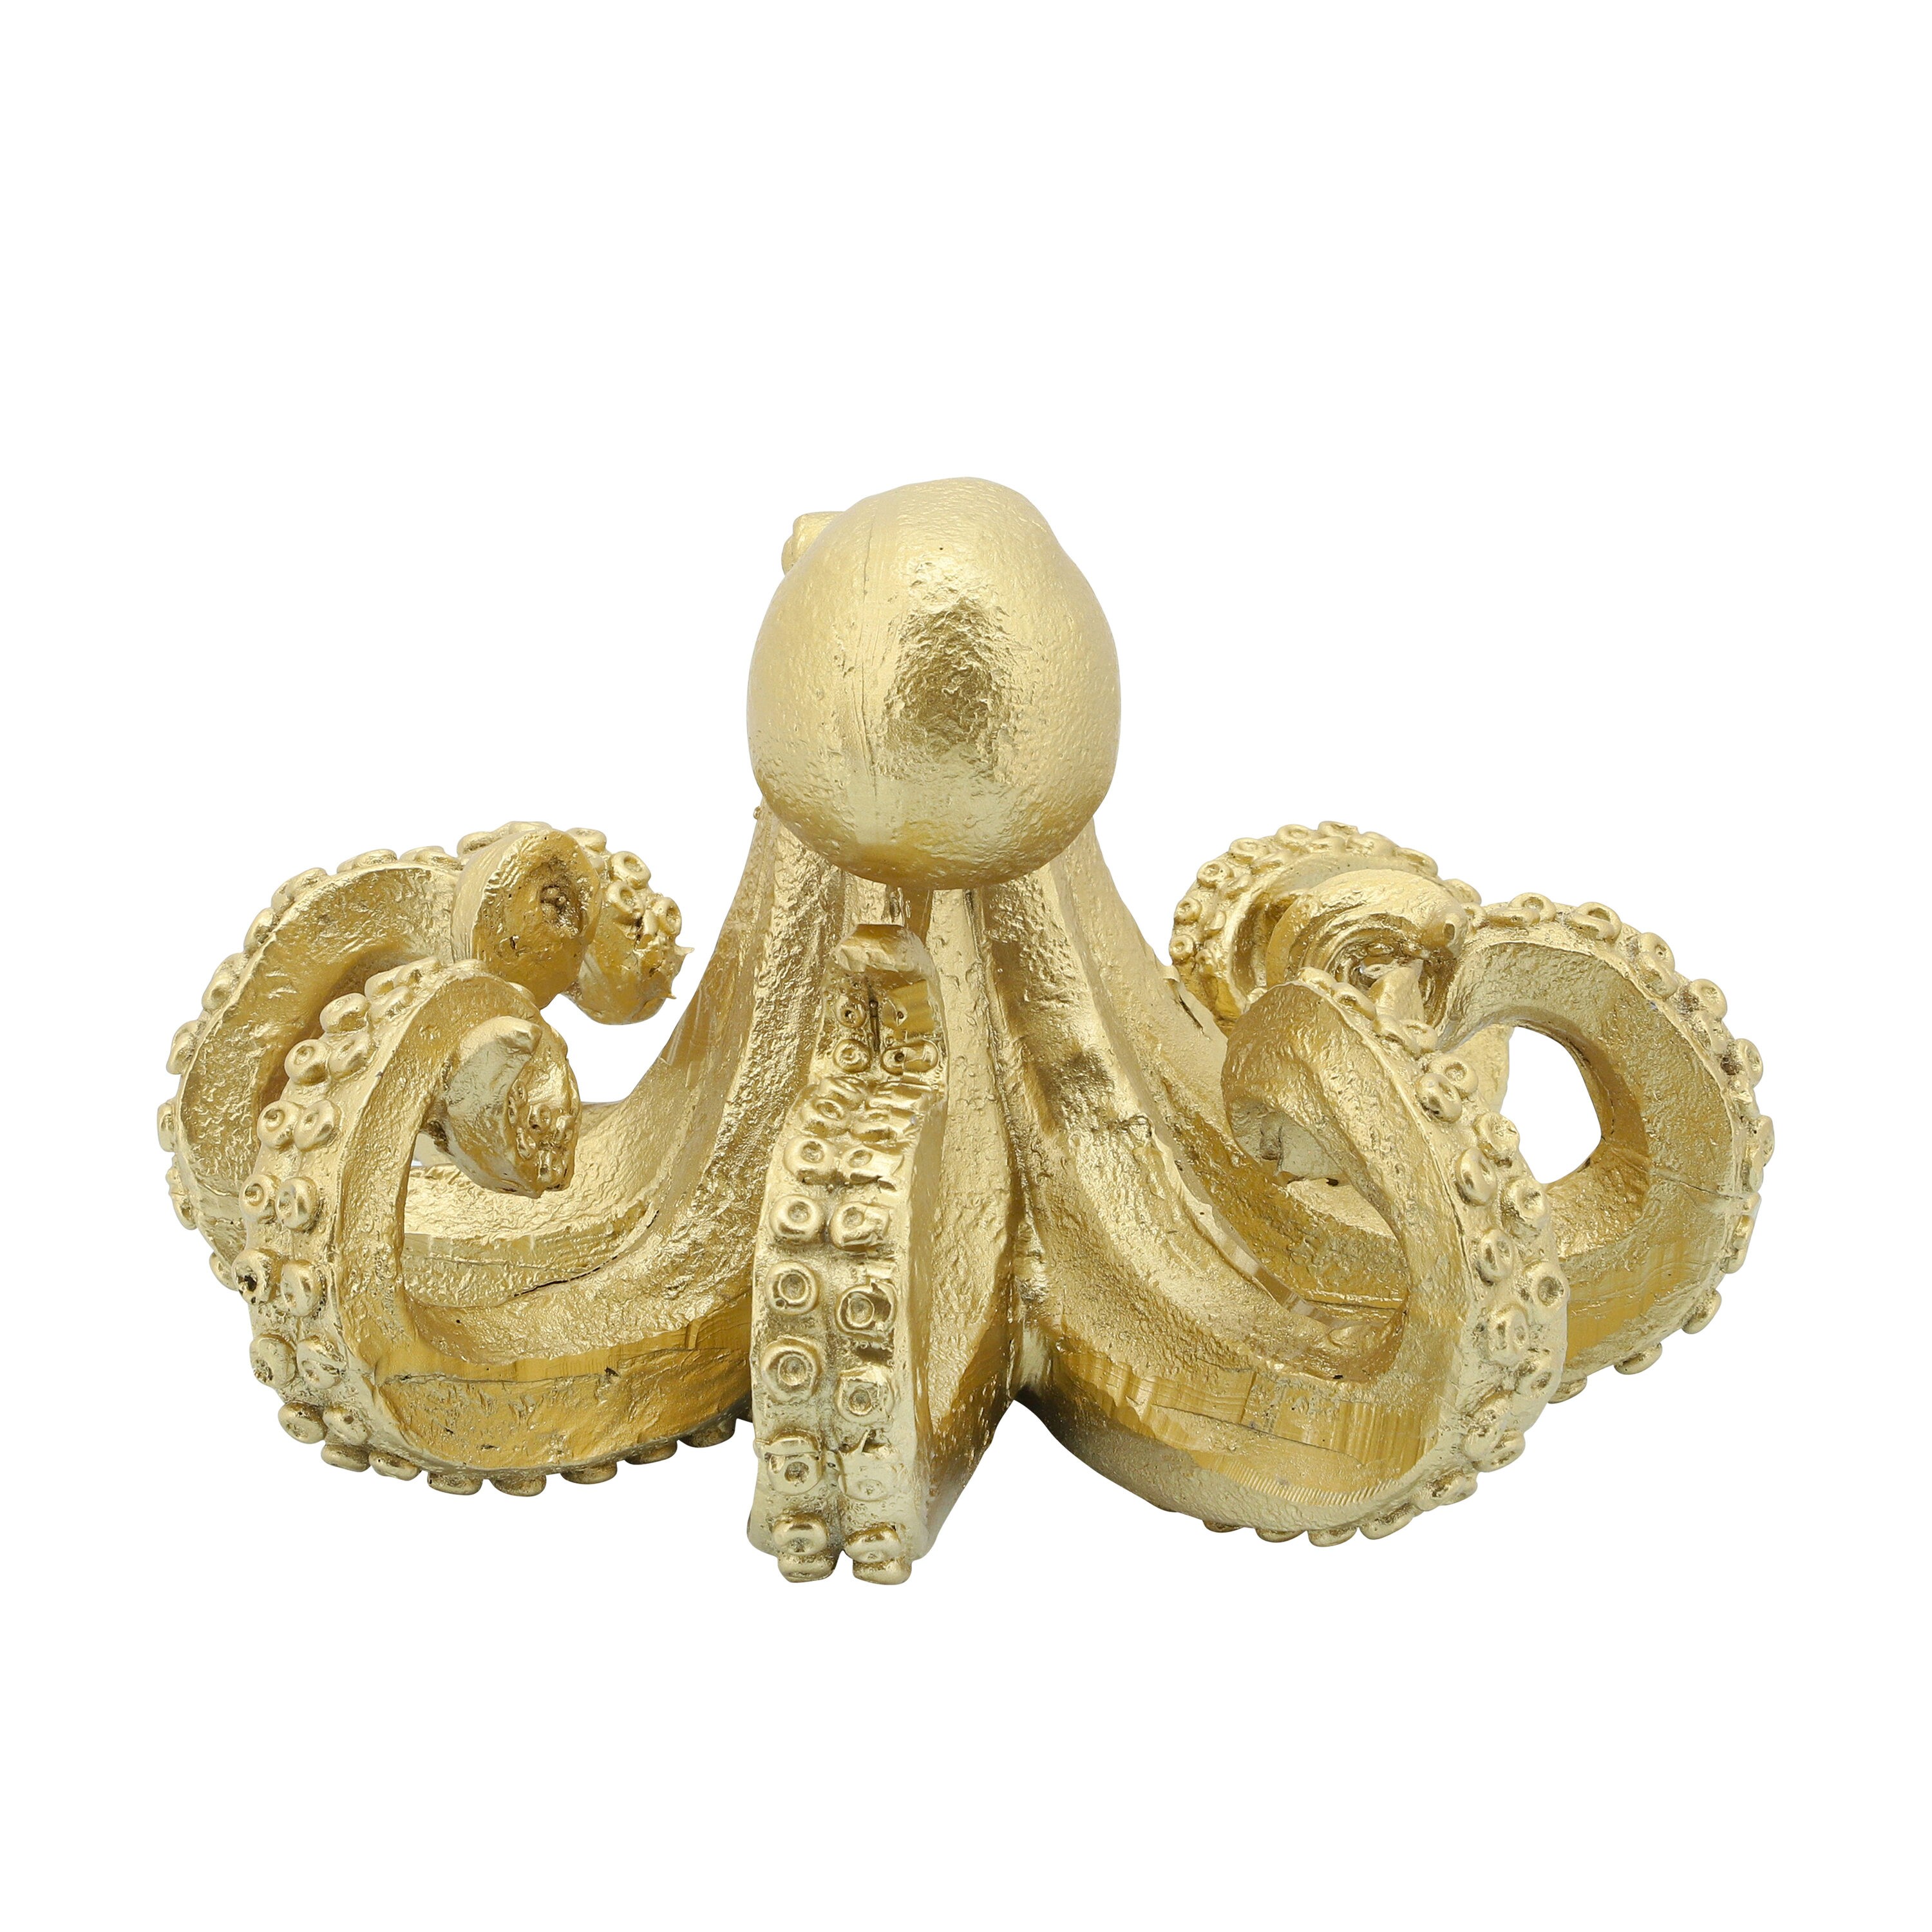 Octopus Decorative Accessories at Lowes.com